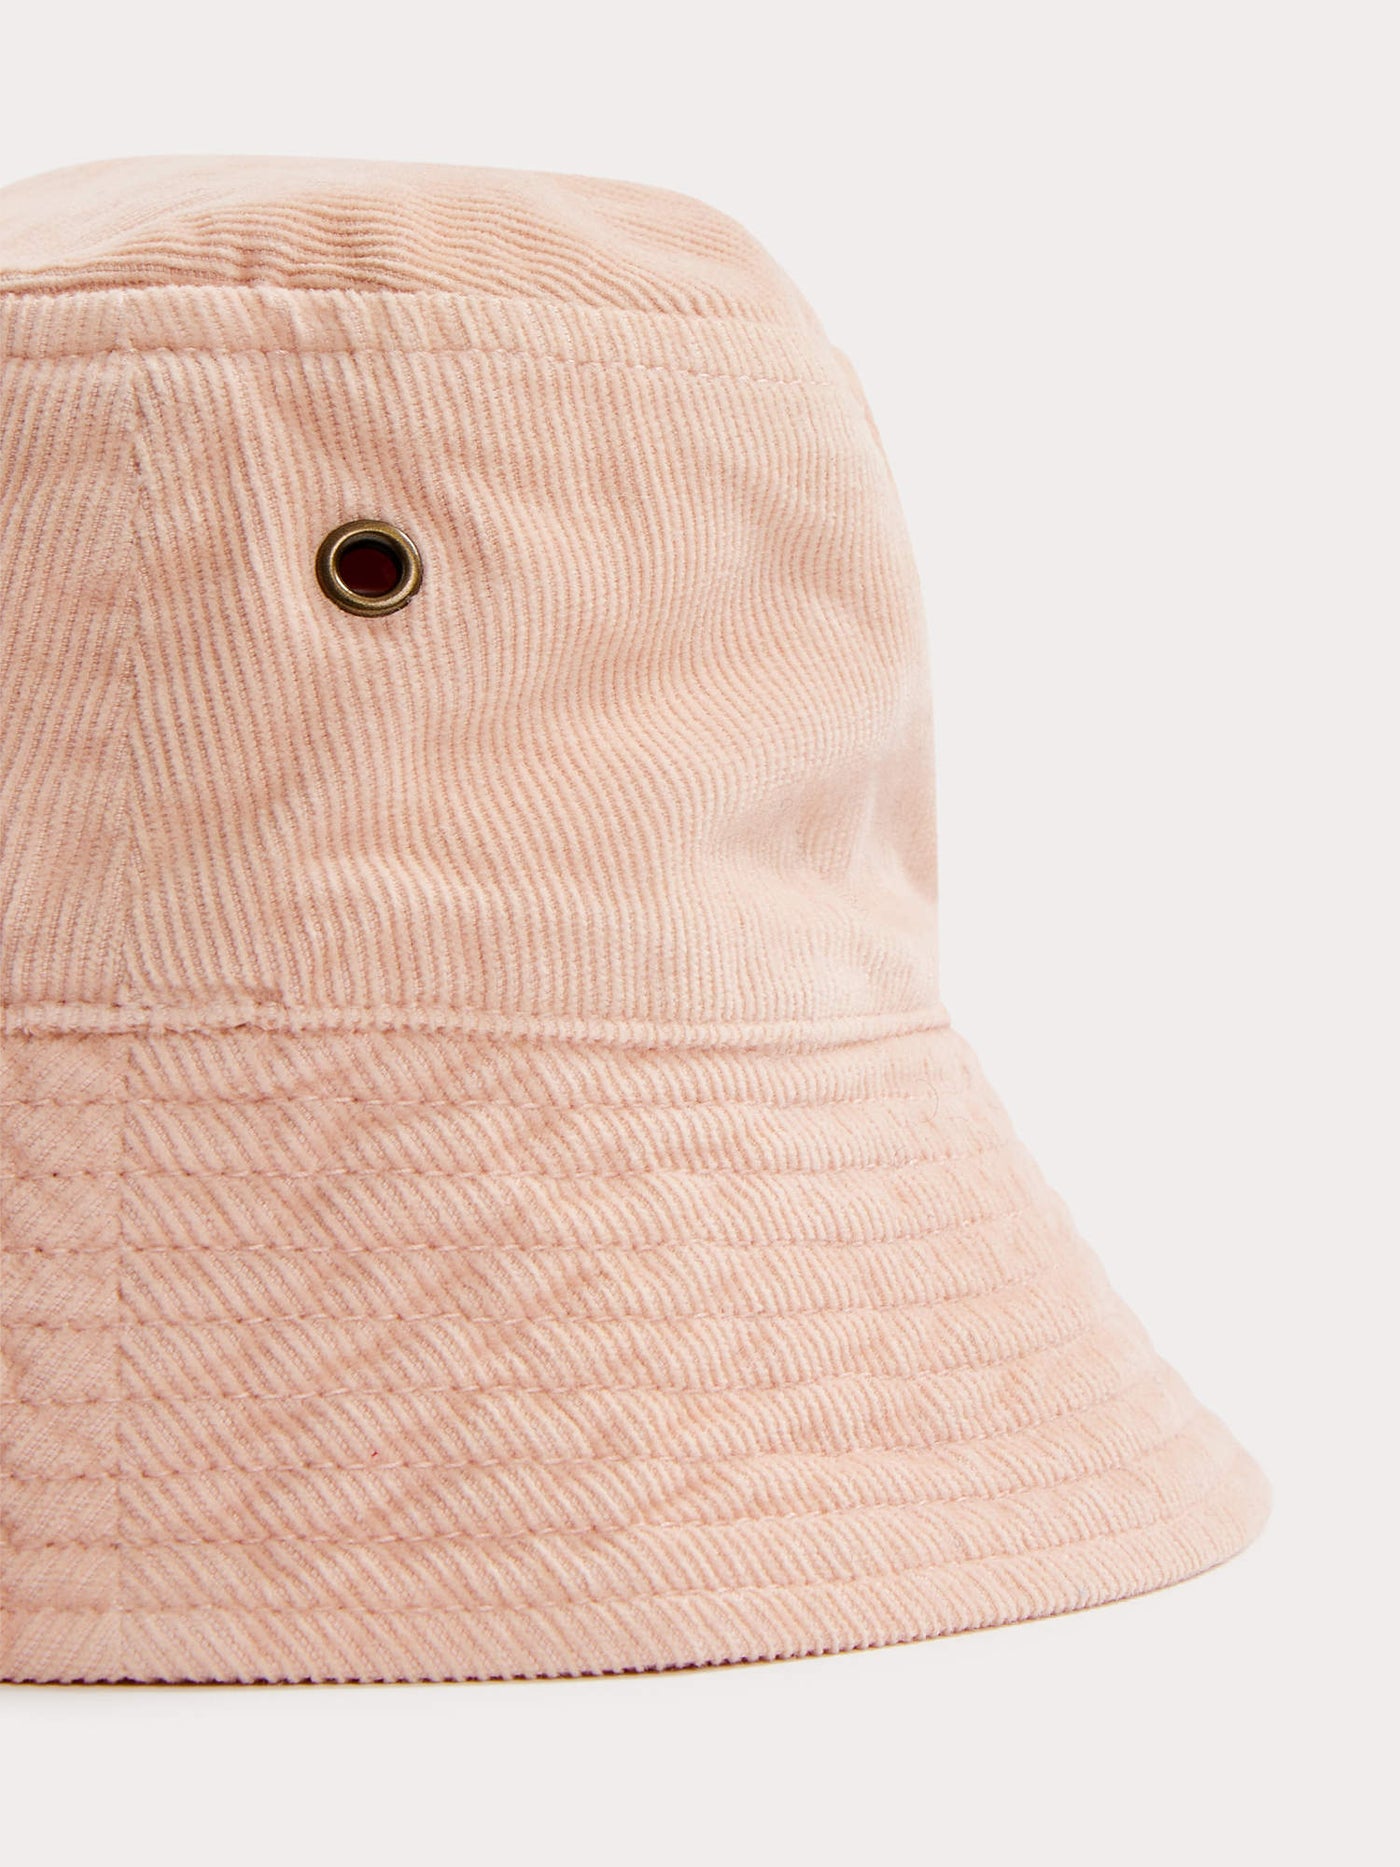 Theana Bucket Hat blush pink